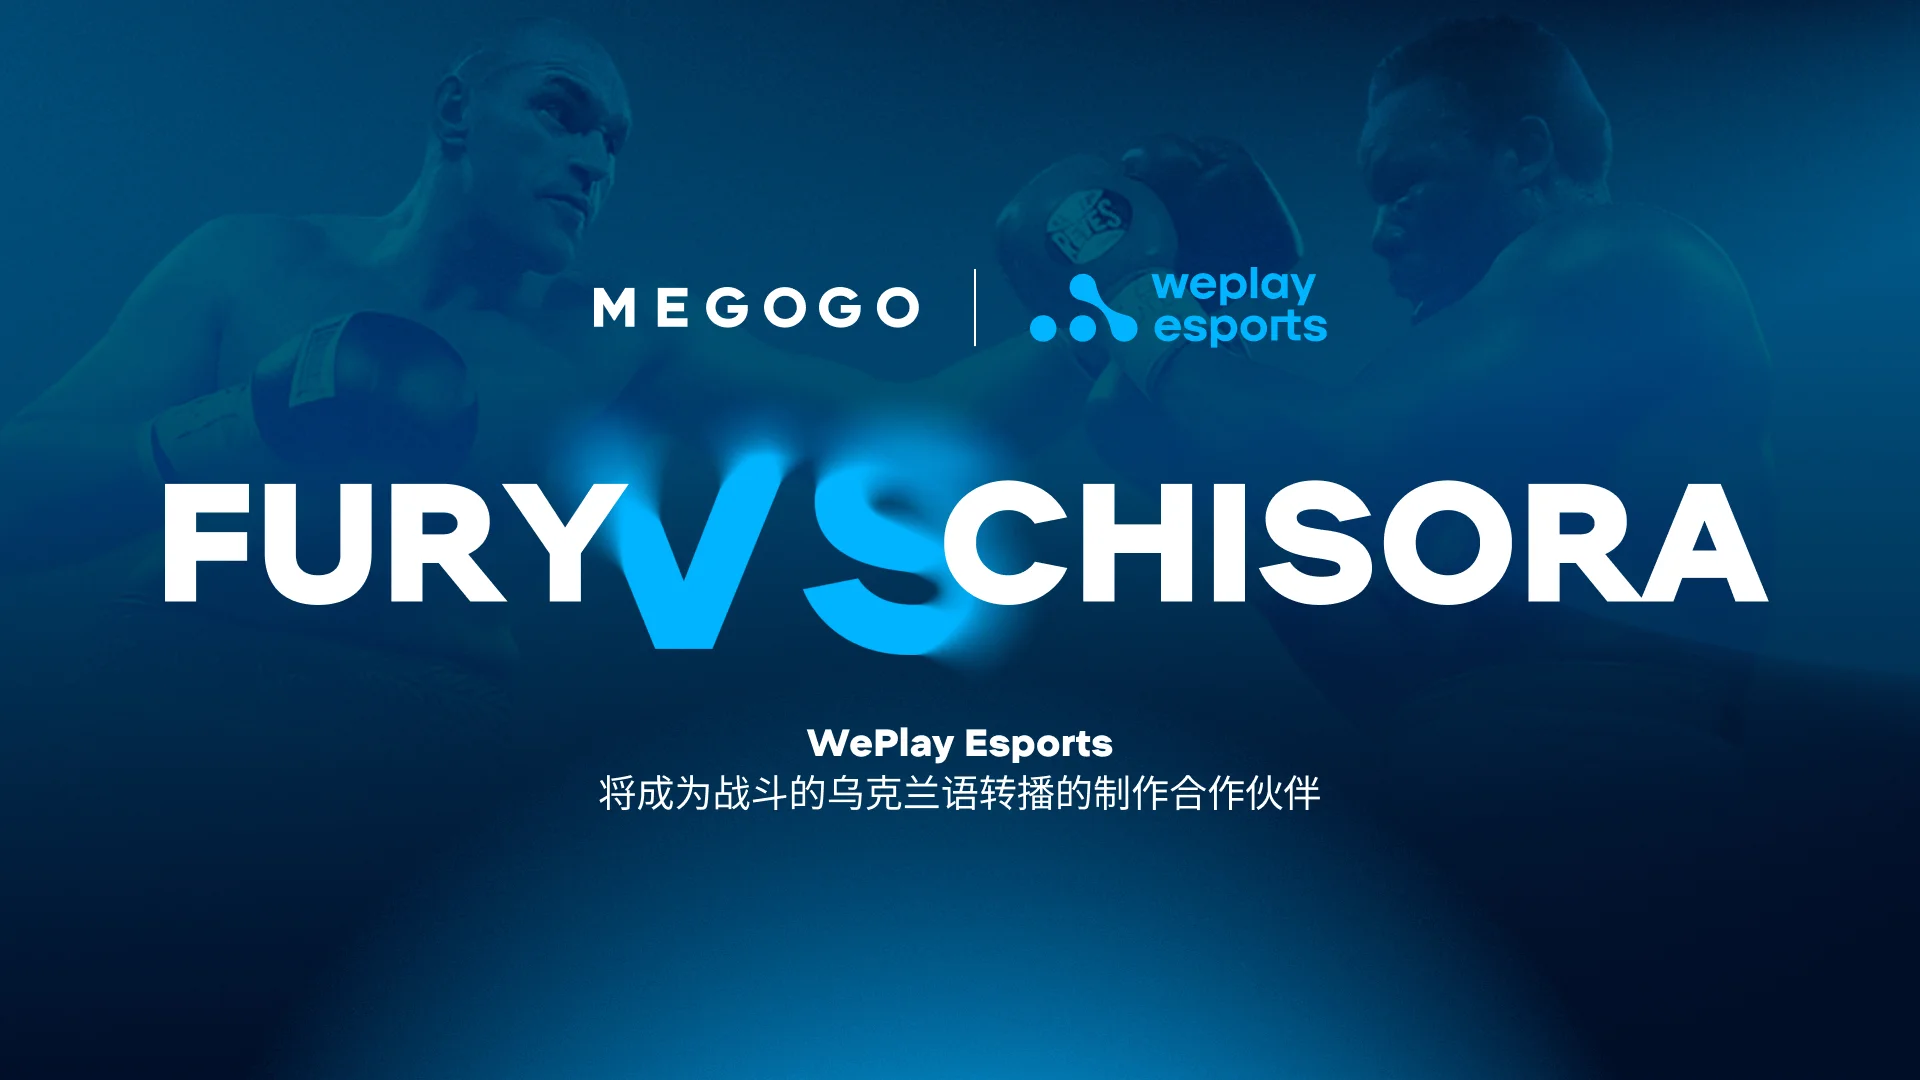 WePlay Esports 将成为 MEGOGO 上 Fury - Chisora 战斗的乌克兰语转播的制作合作伙伴。图像： WePlay Holding